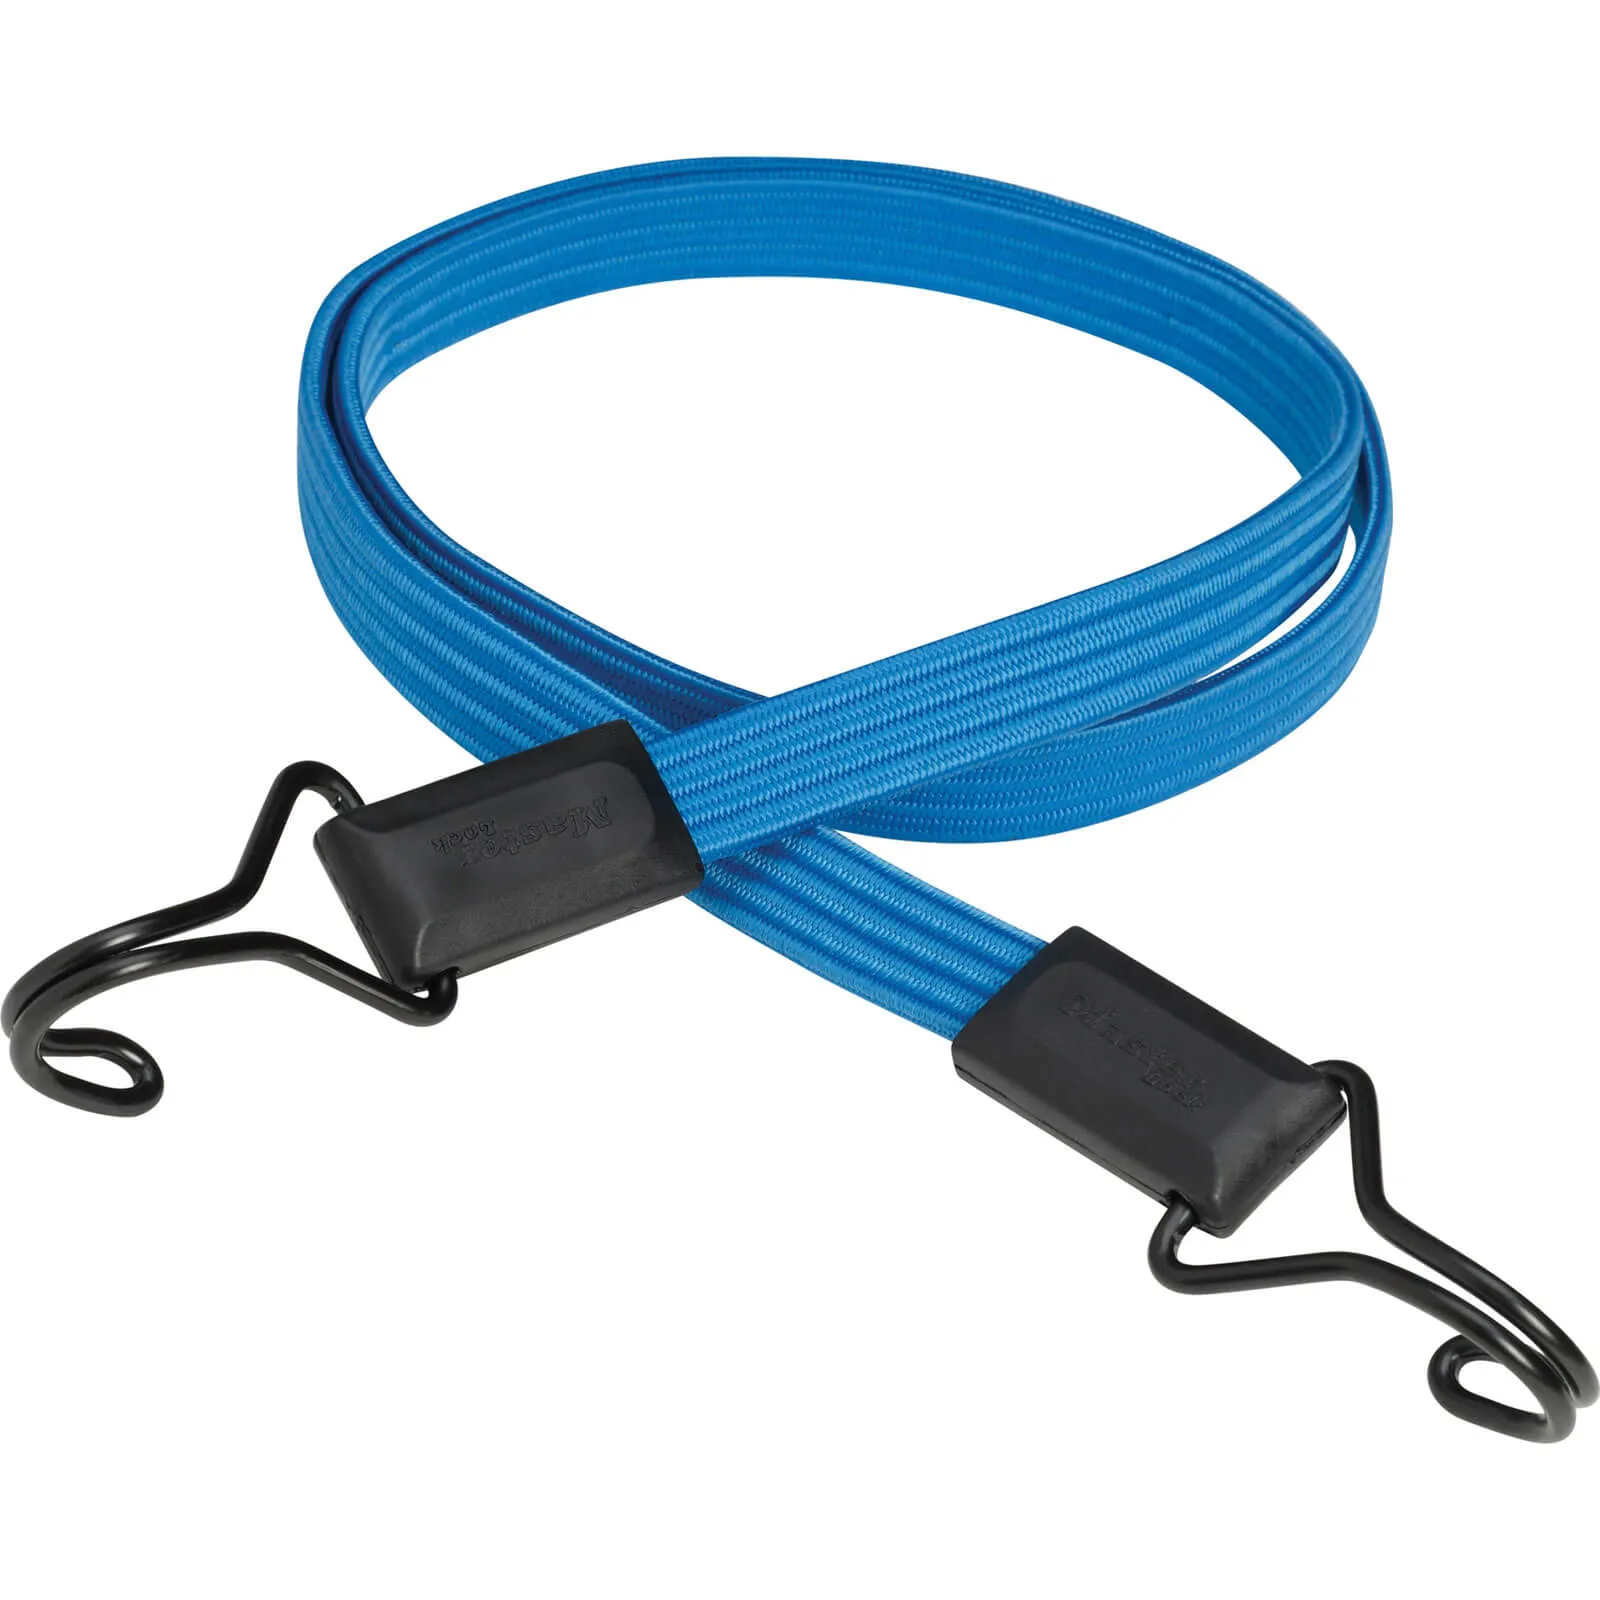 Masterlock Double Hook Flat Bungee Cord - 1200mm, Blue, Pack of 1